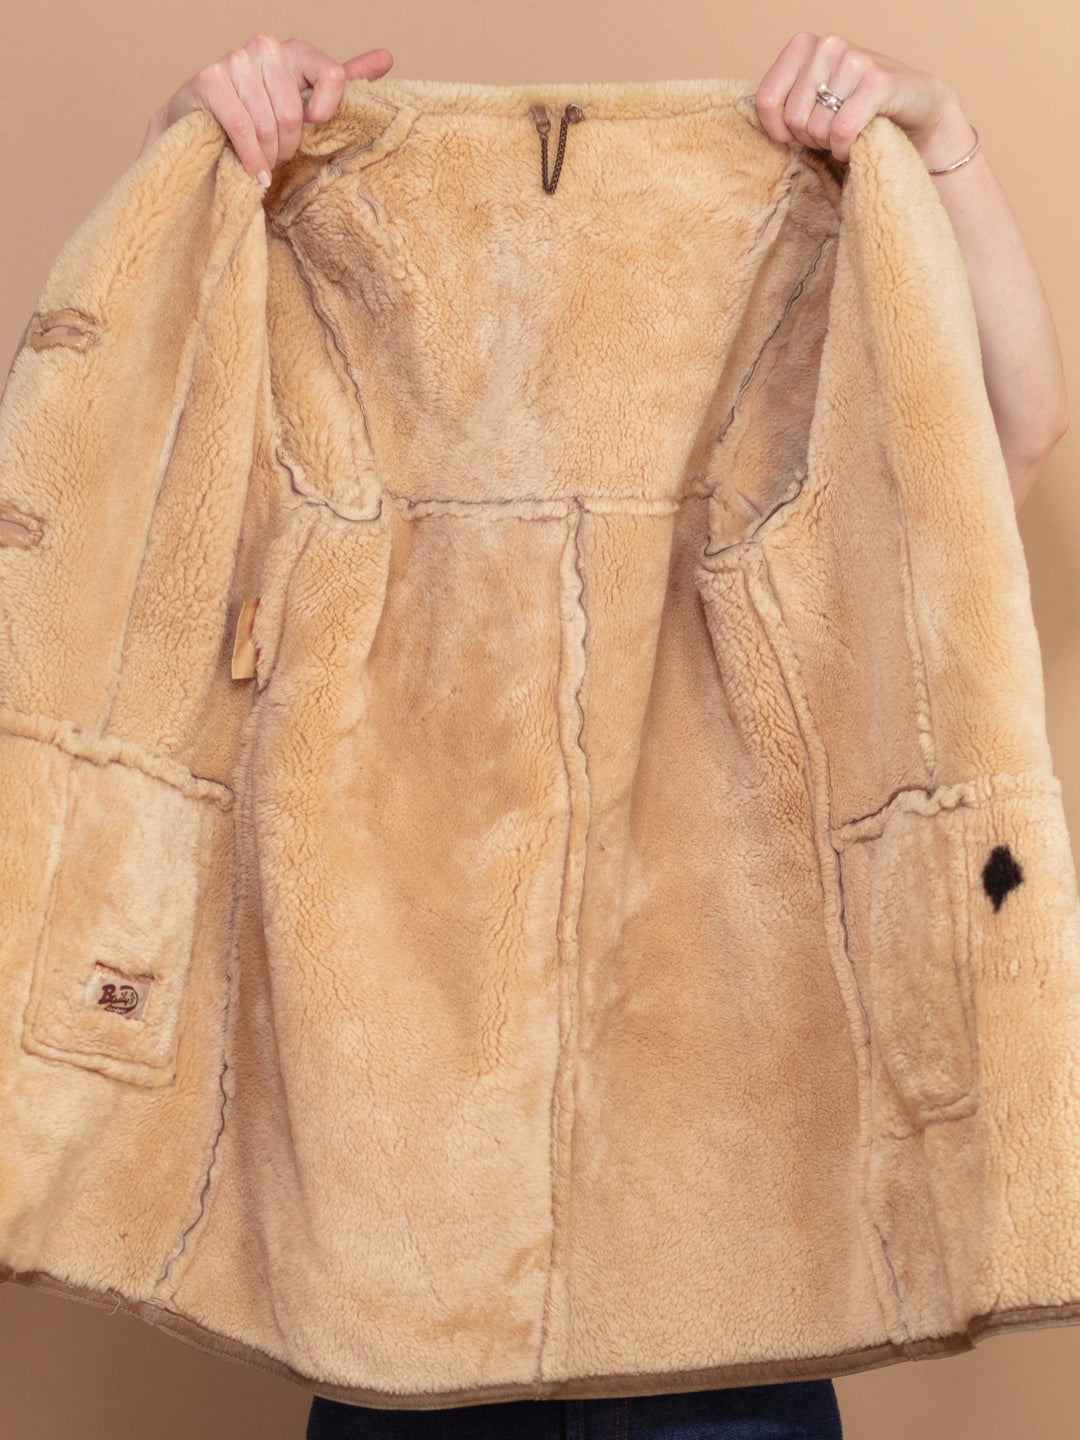 Sheepskin Shearl Coat, Size M Vintage 70's Sheepskin Coat, Beige Sheepskin Winter Coat, Sheepskin Suede Coat, Boho Western Hippie Style Coat